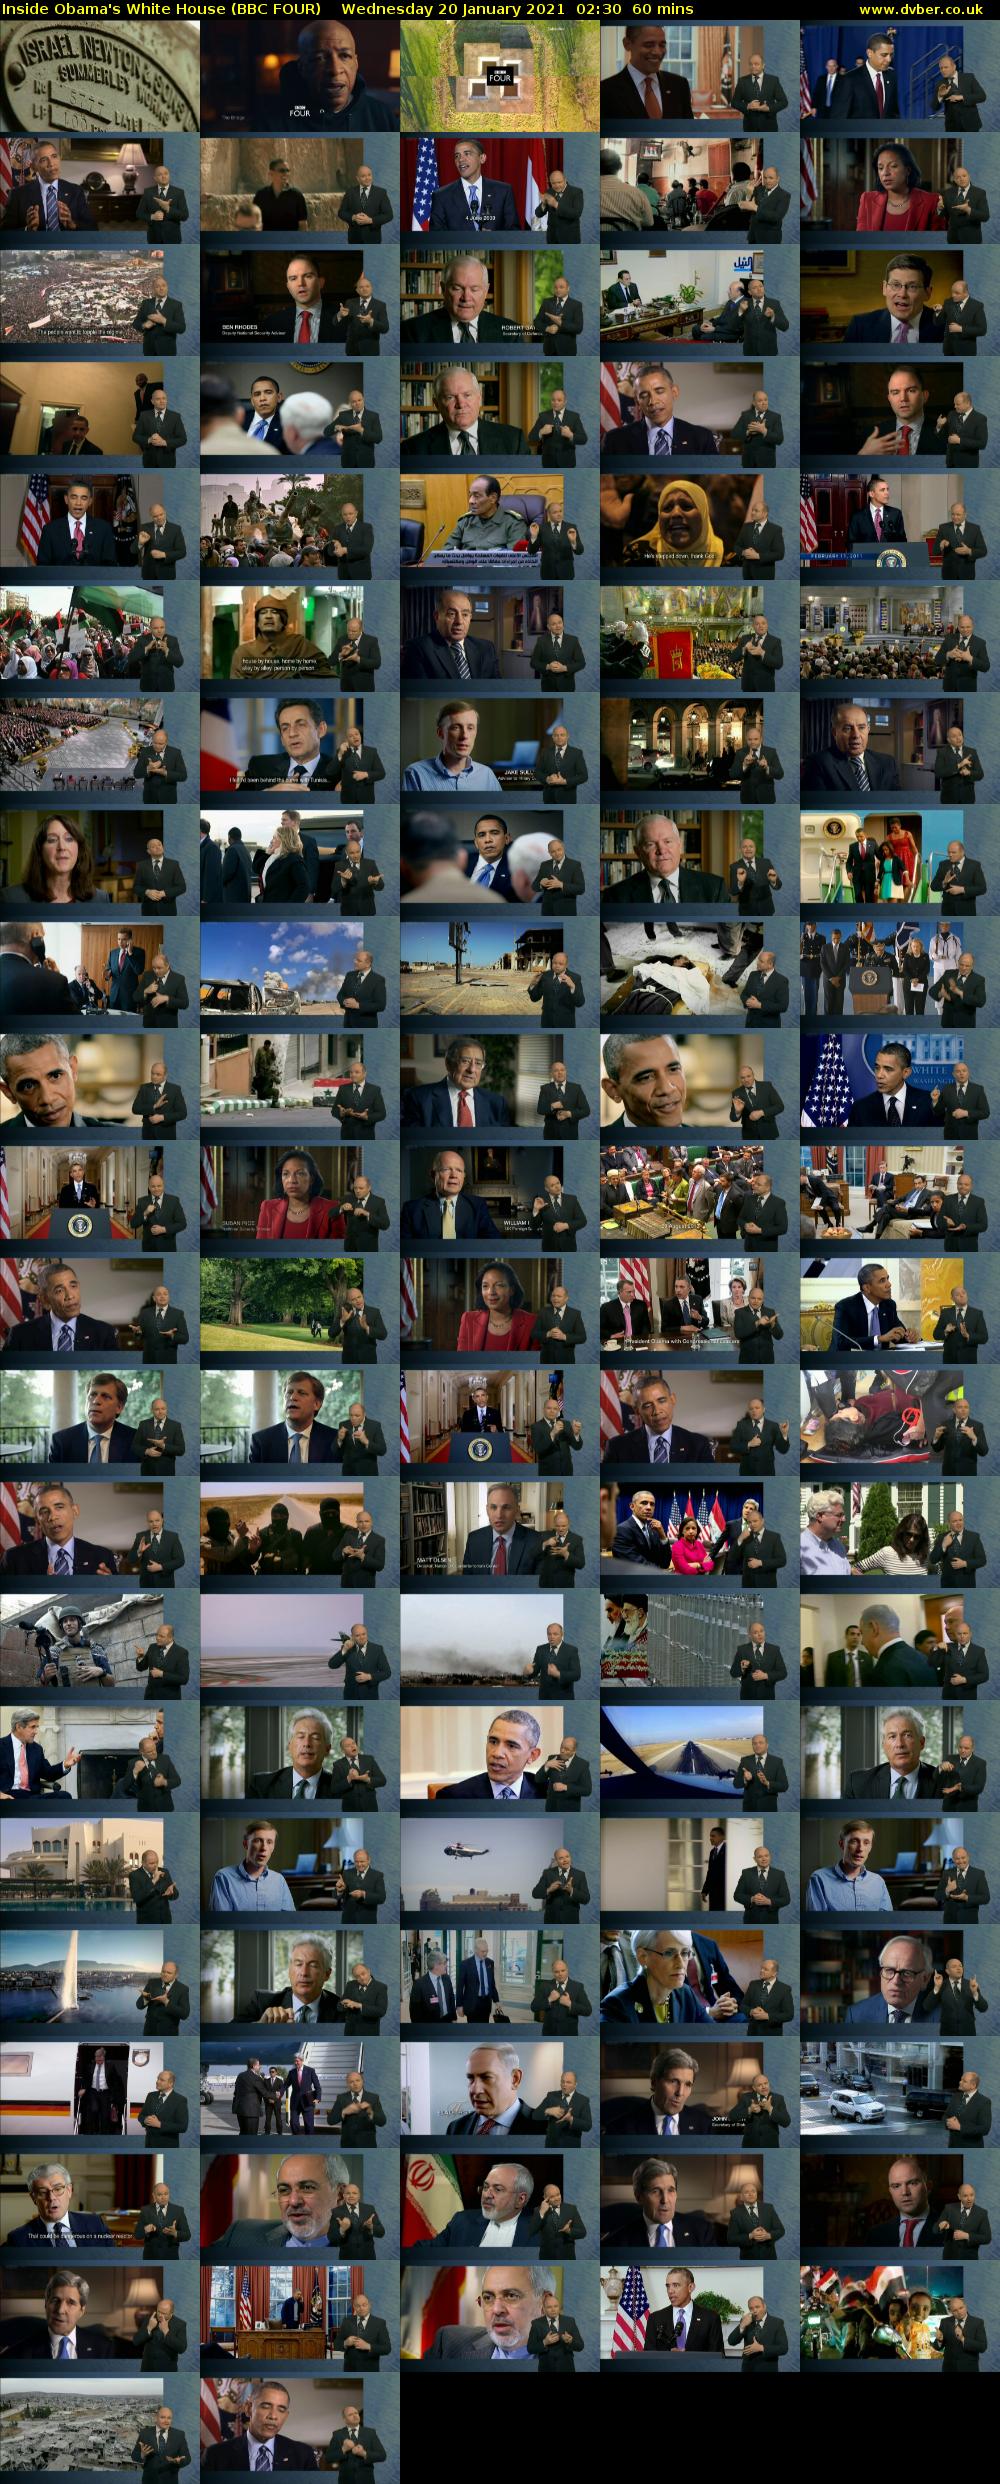 Inside Obama's White House (BBC FOUR) Wednesday 20 January 2021 02:30 - 03:30